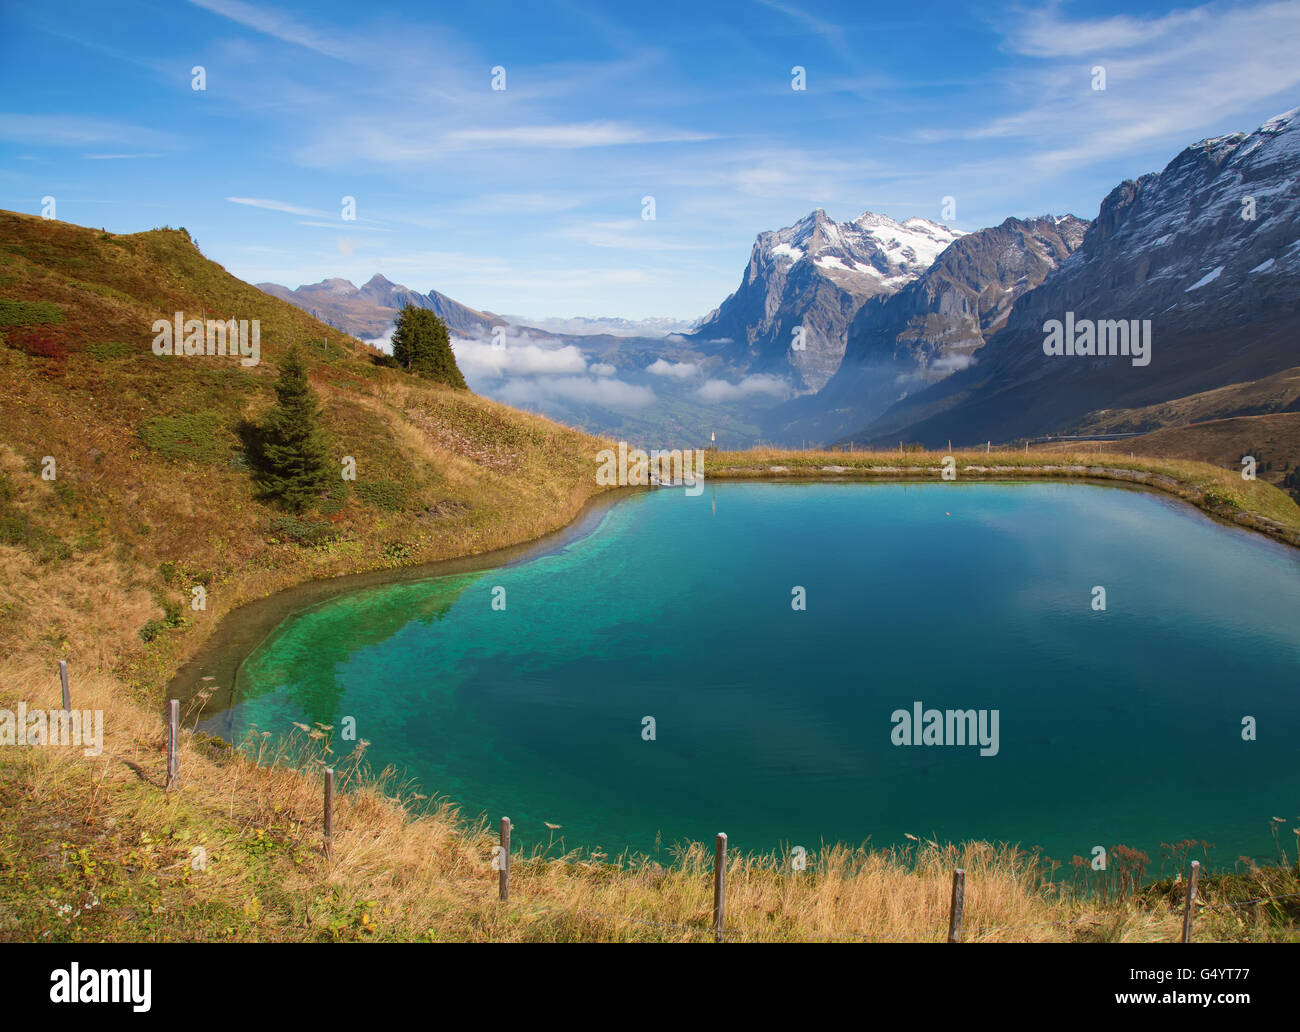 Autumn landscape in the Jungfrau region Stock Photo